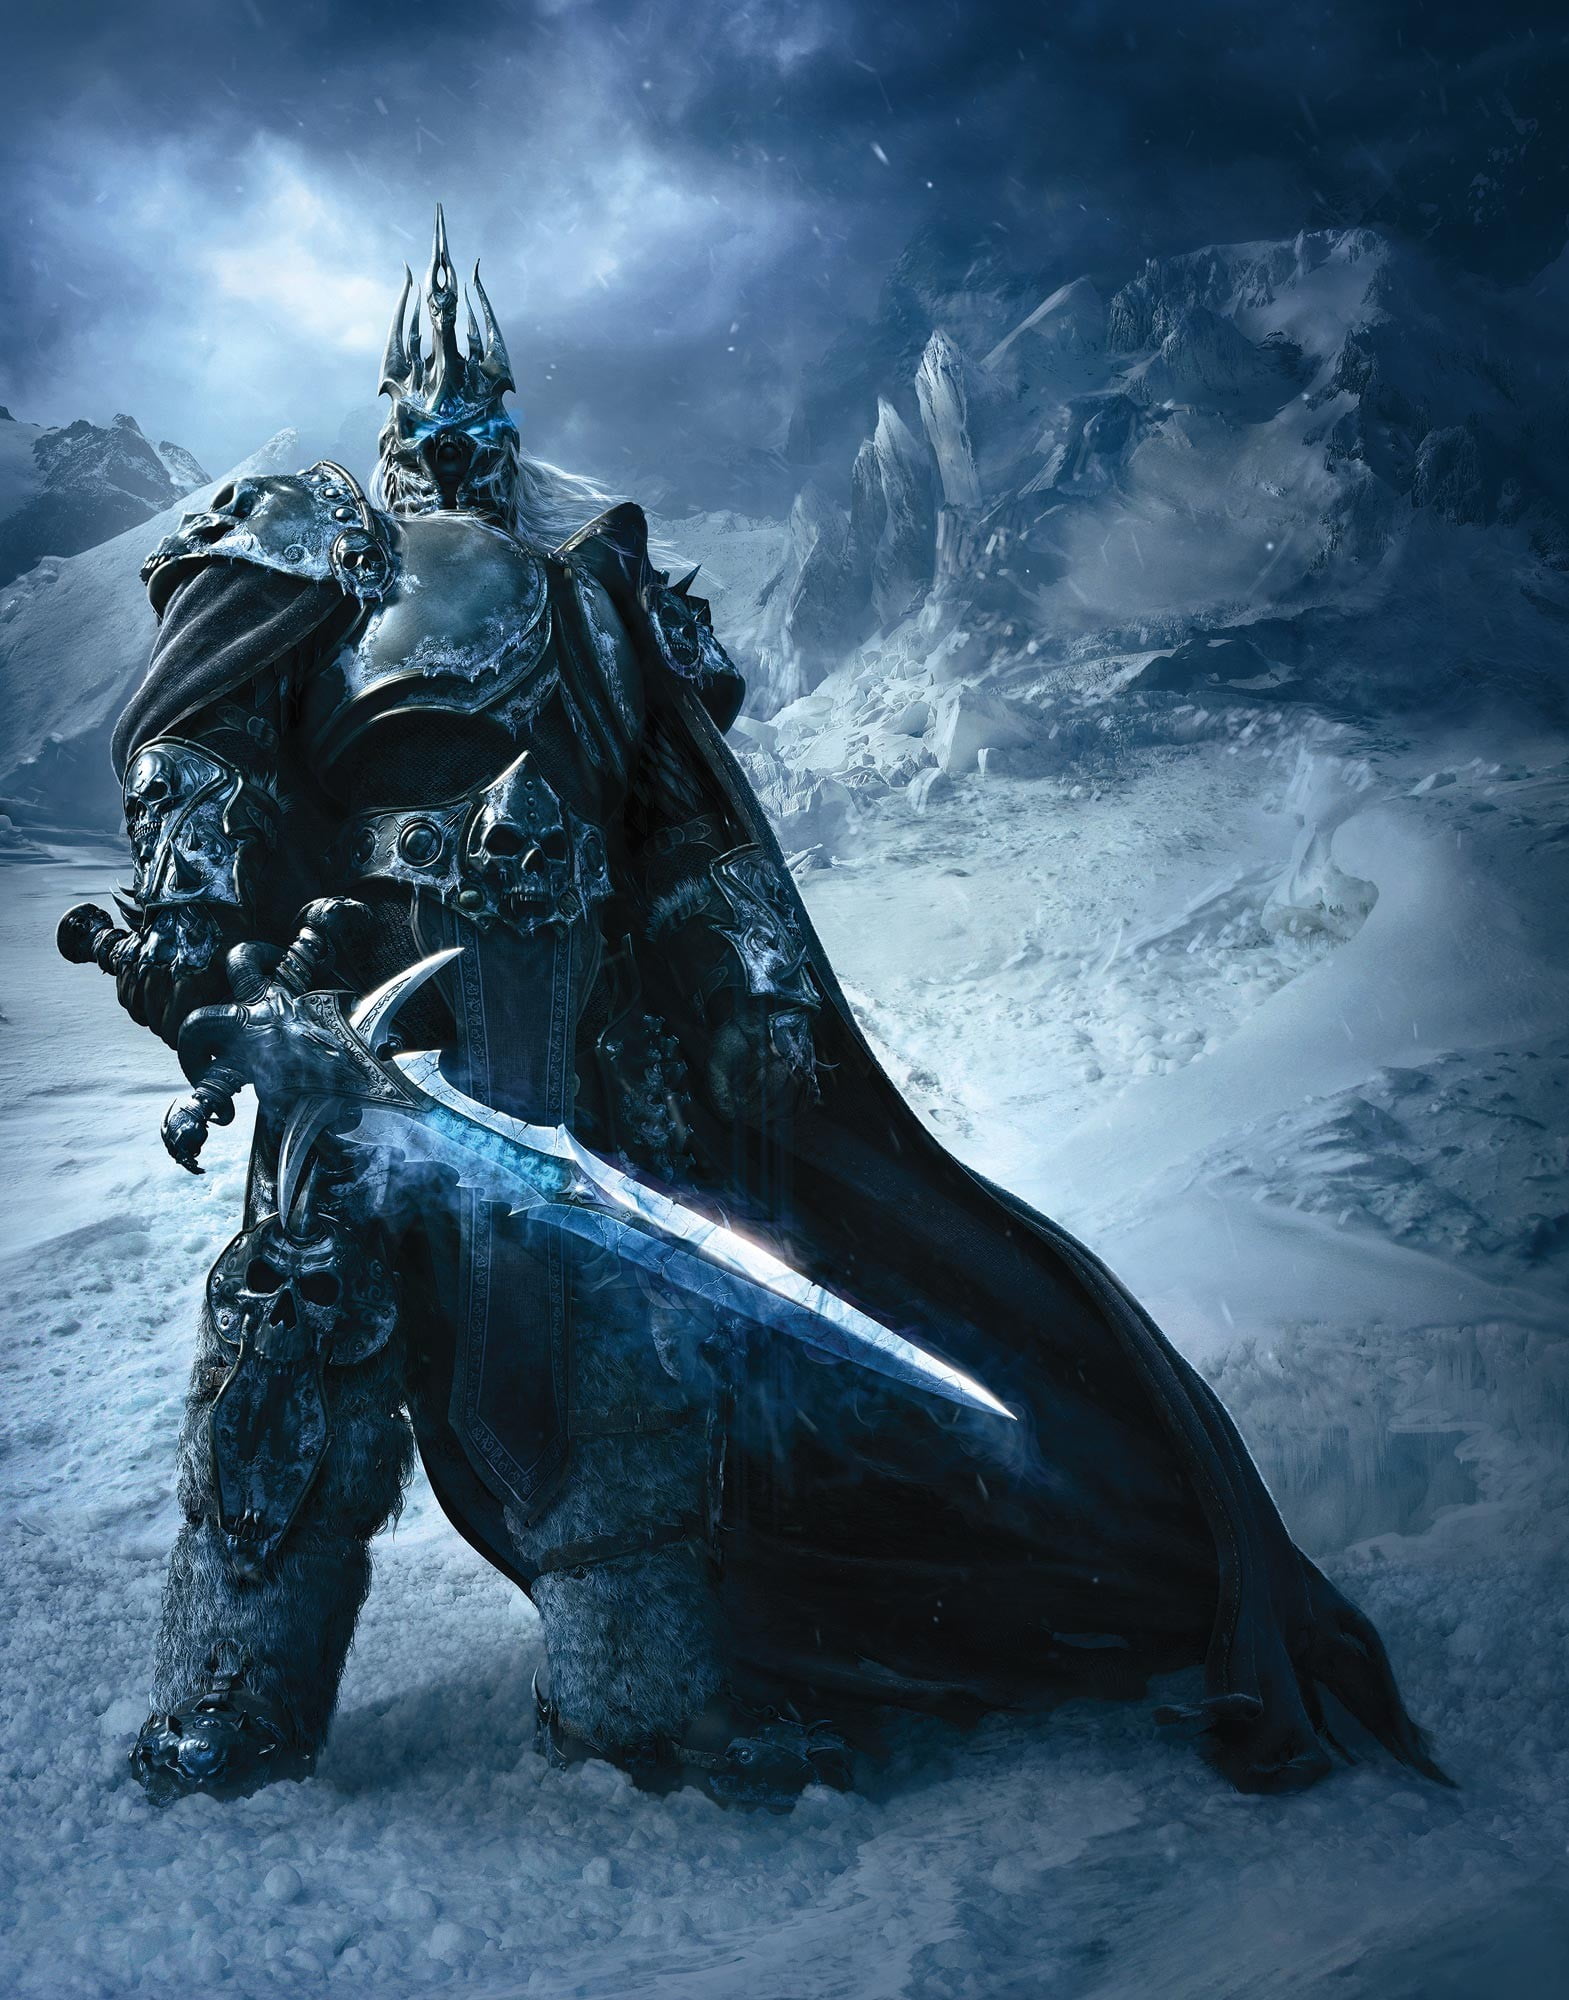 World of Warcraft Arthas Lich King wallpaper, World of Warcraft: Wrath of the Lich King